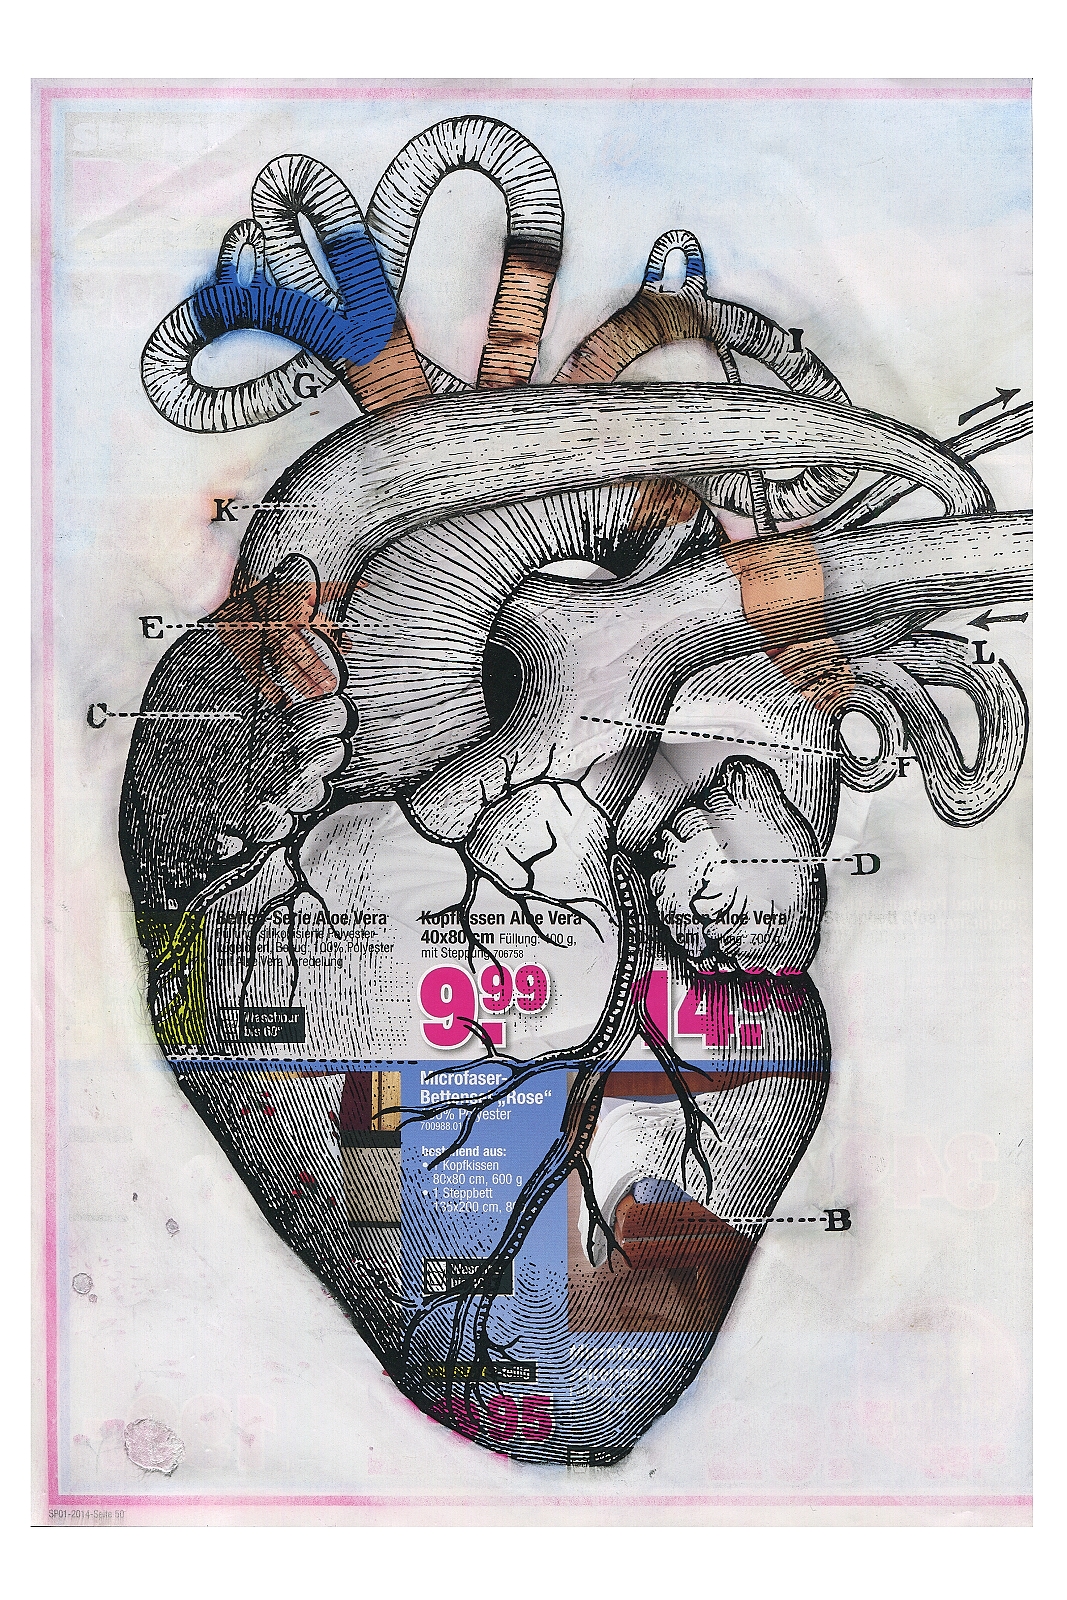 "The secret cardiology of consumerism", 2018, lavender oil, c-print and feltpen on magazine page, 19.8 x 28.3 cm